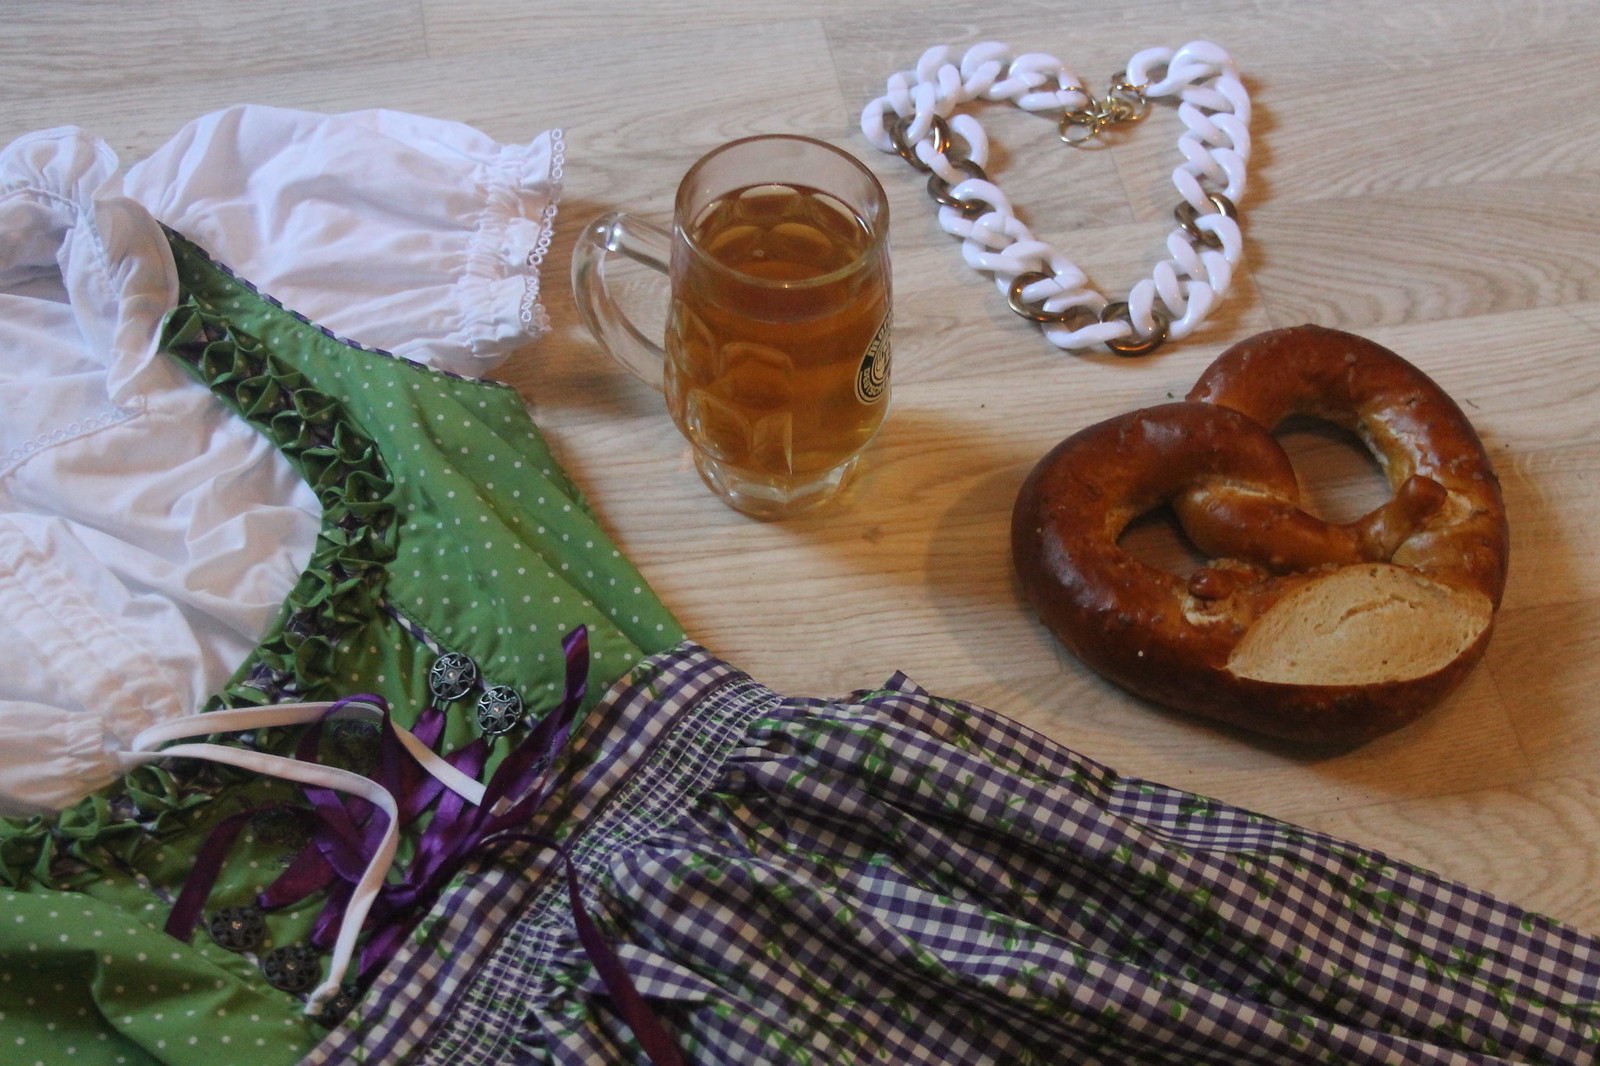 zalando-oktoberfest-dirndl-wiesn-gruen-lila-bier-brezel-outfit-fashionblog-anziehen